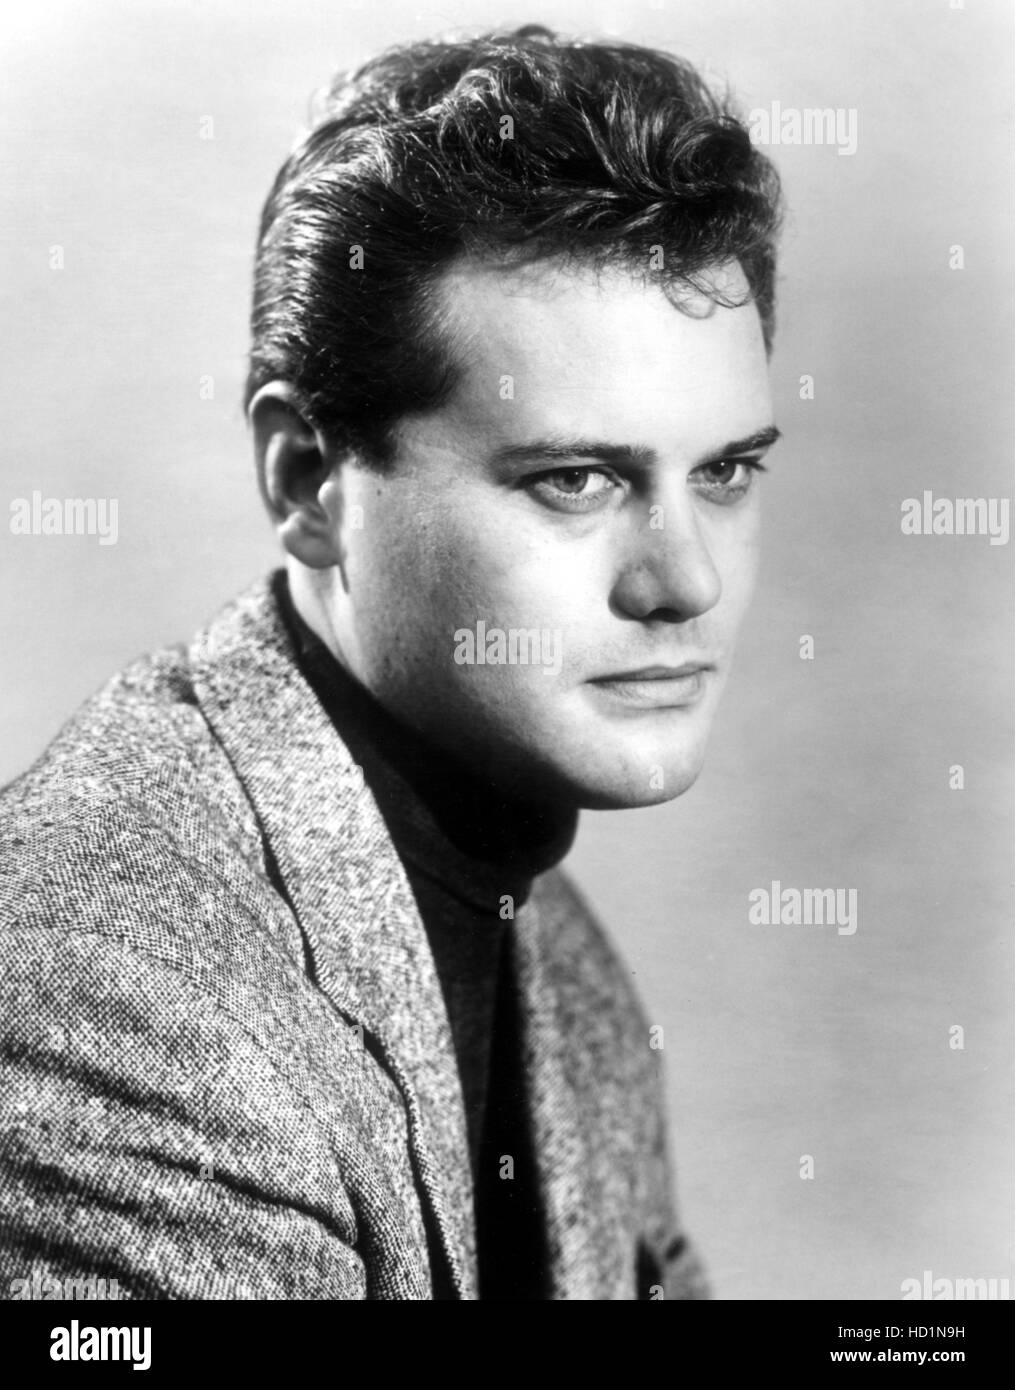 Larry Hagman, portrait ca. 1958 Stock Photo - Alamy